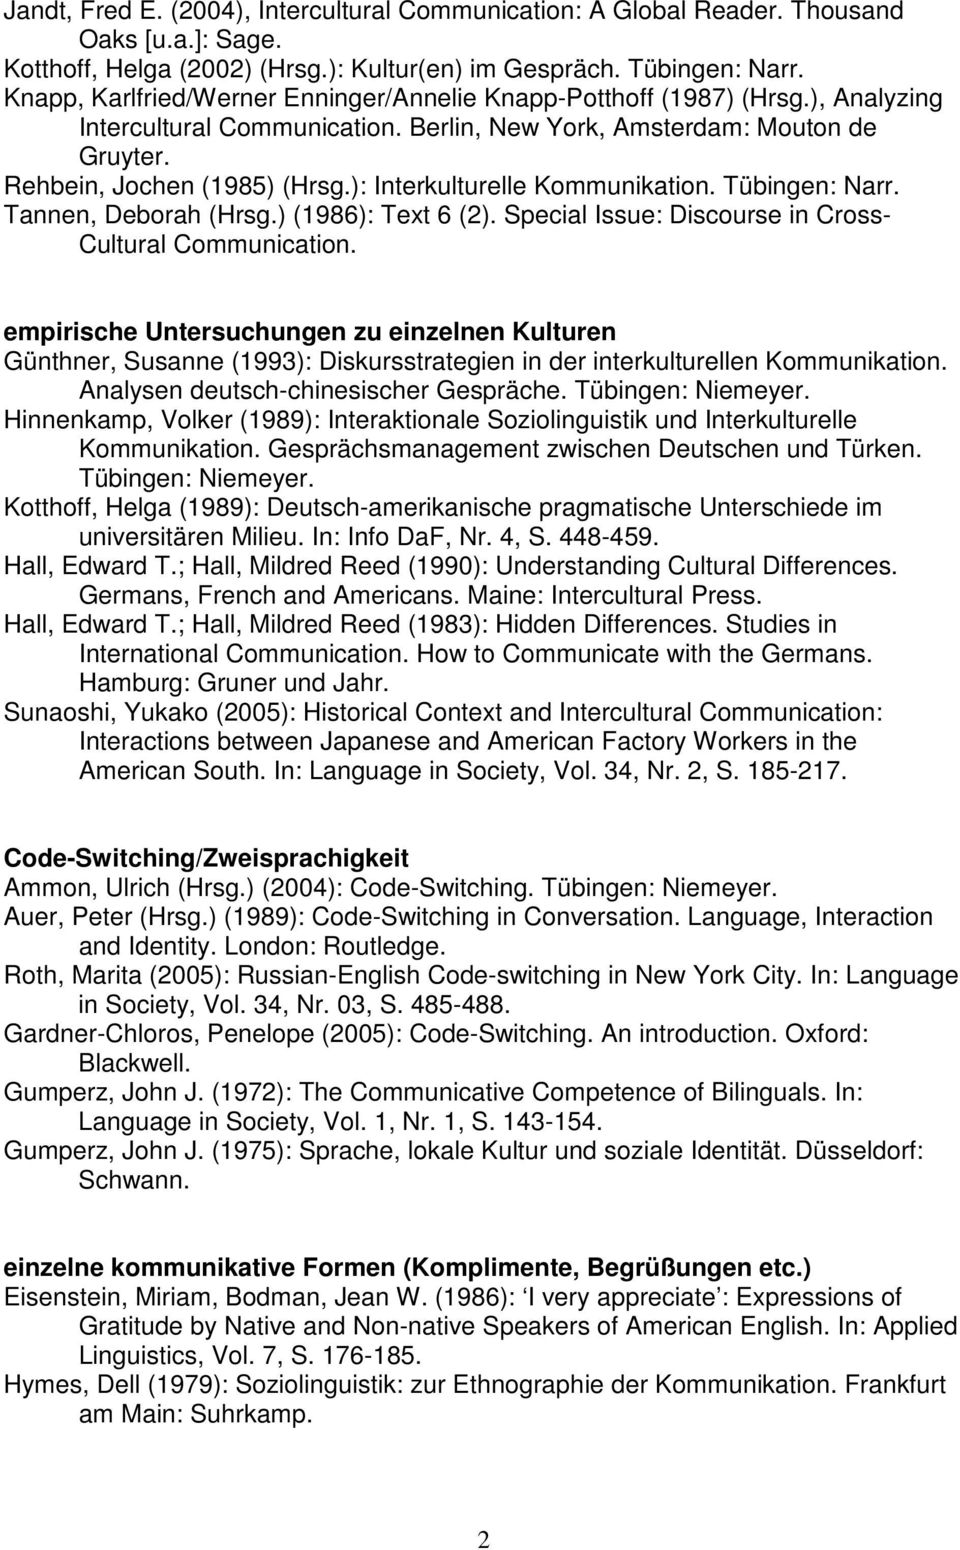 ): Interkulturelle Kommunikation. Tübingen: Narr. Tannen, Deborah (Hrsg.) (1986): Text 6 (2). Special Issue: Discourse in Cross- Cultural Communication.